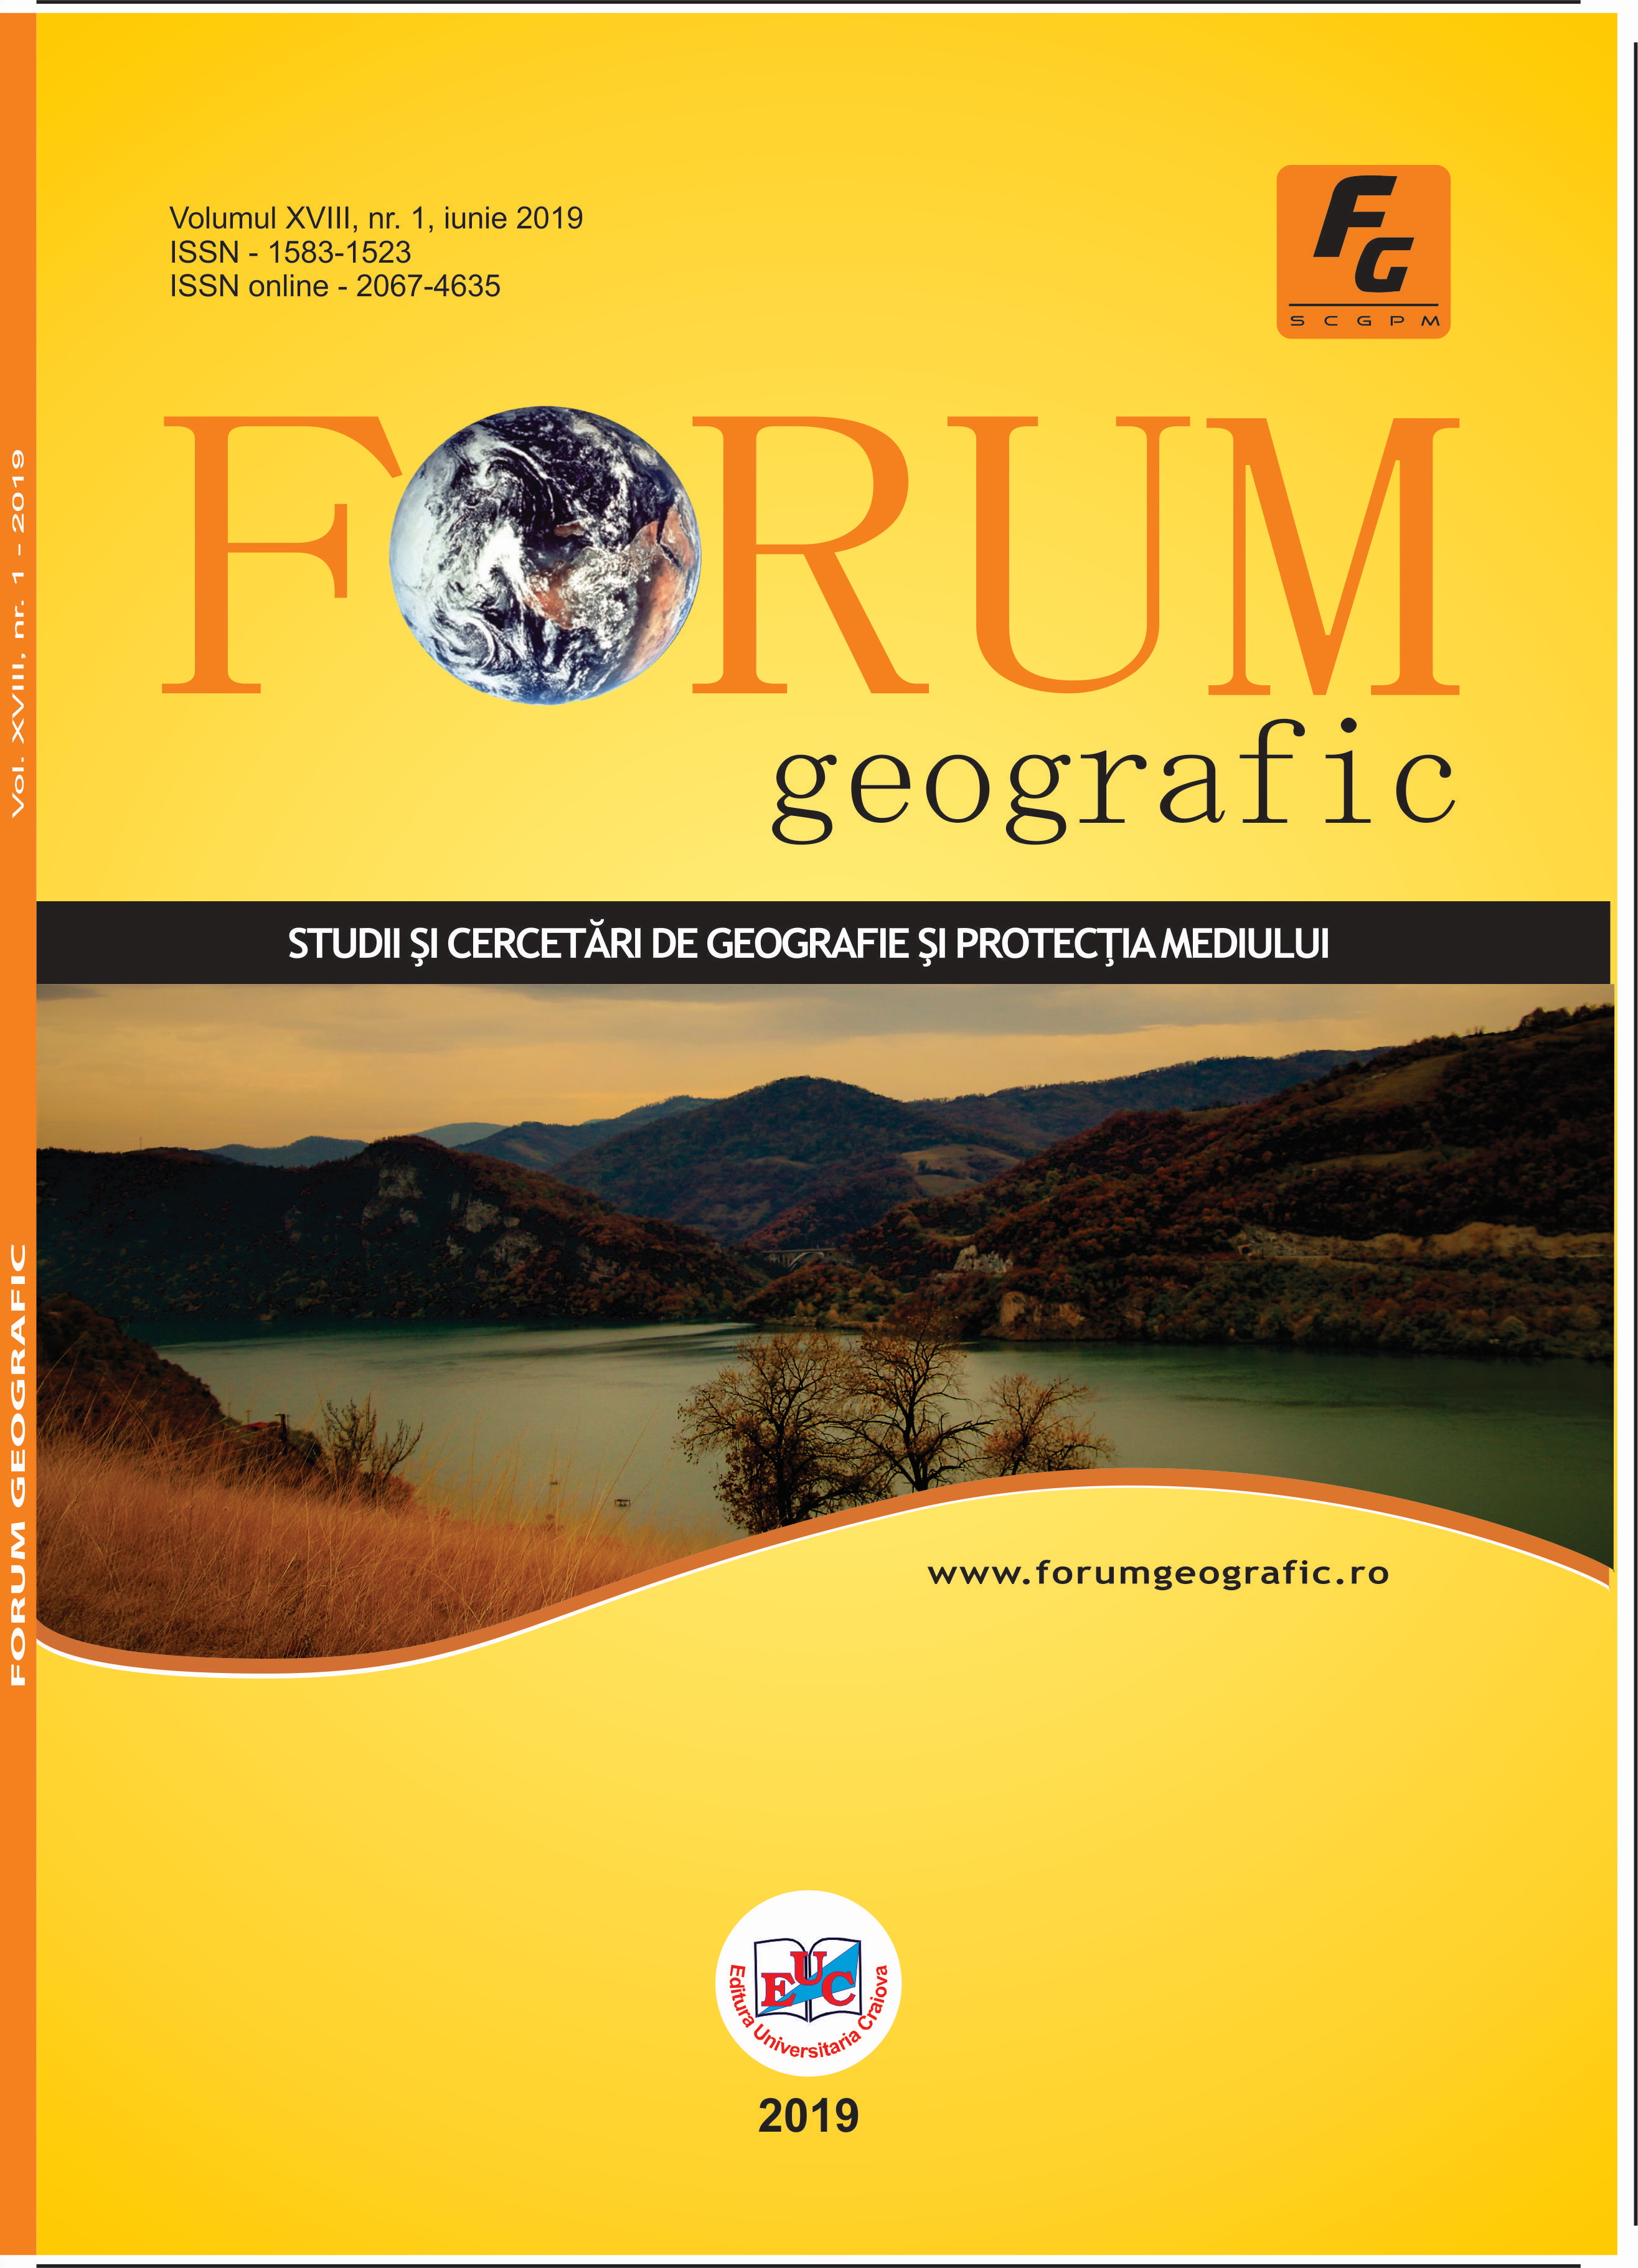 Forum geografic: Volume XVIII, issue 1